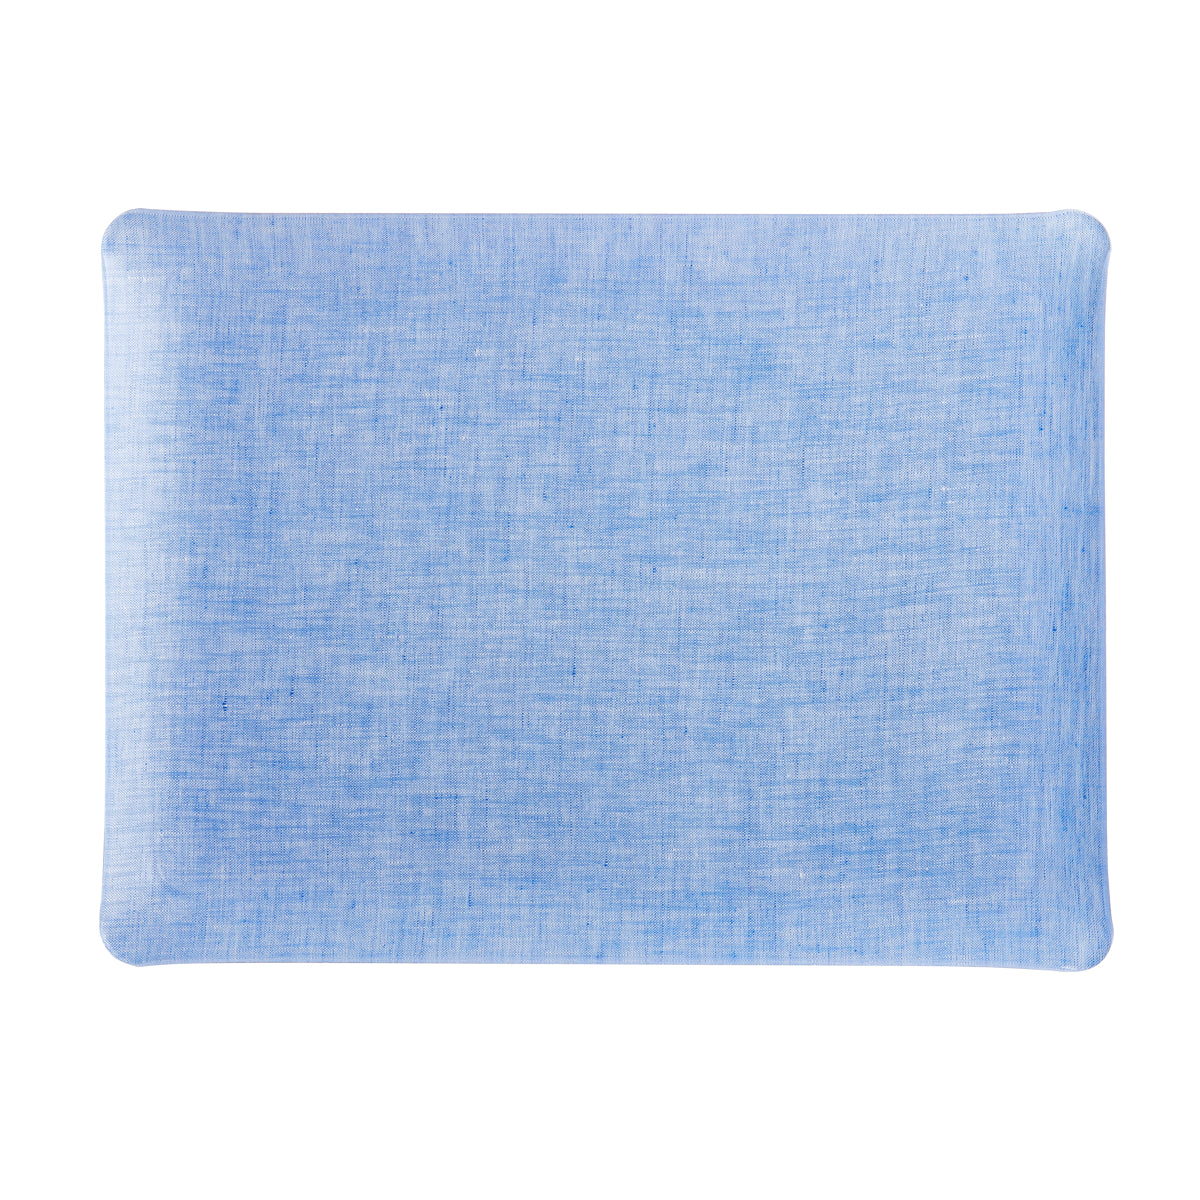 Fabric Tray Medium 37X28 - Blue